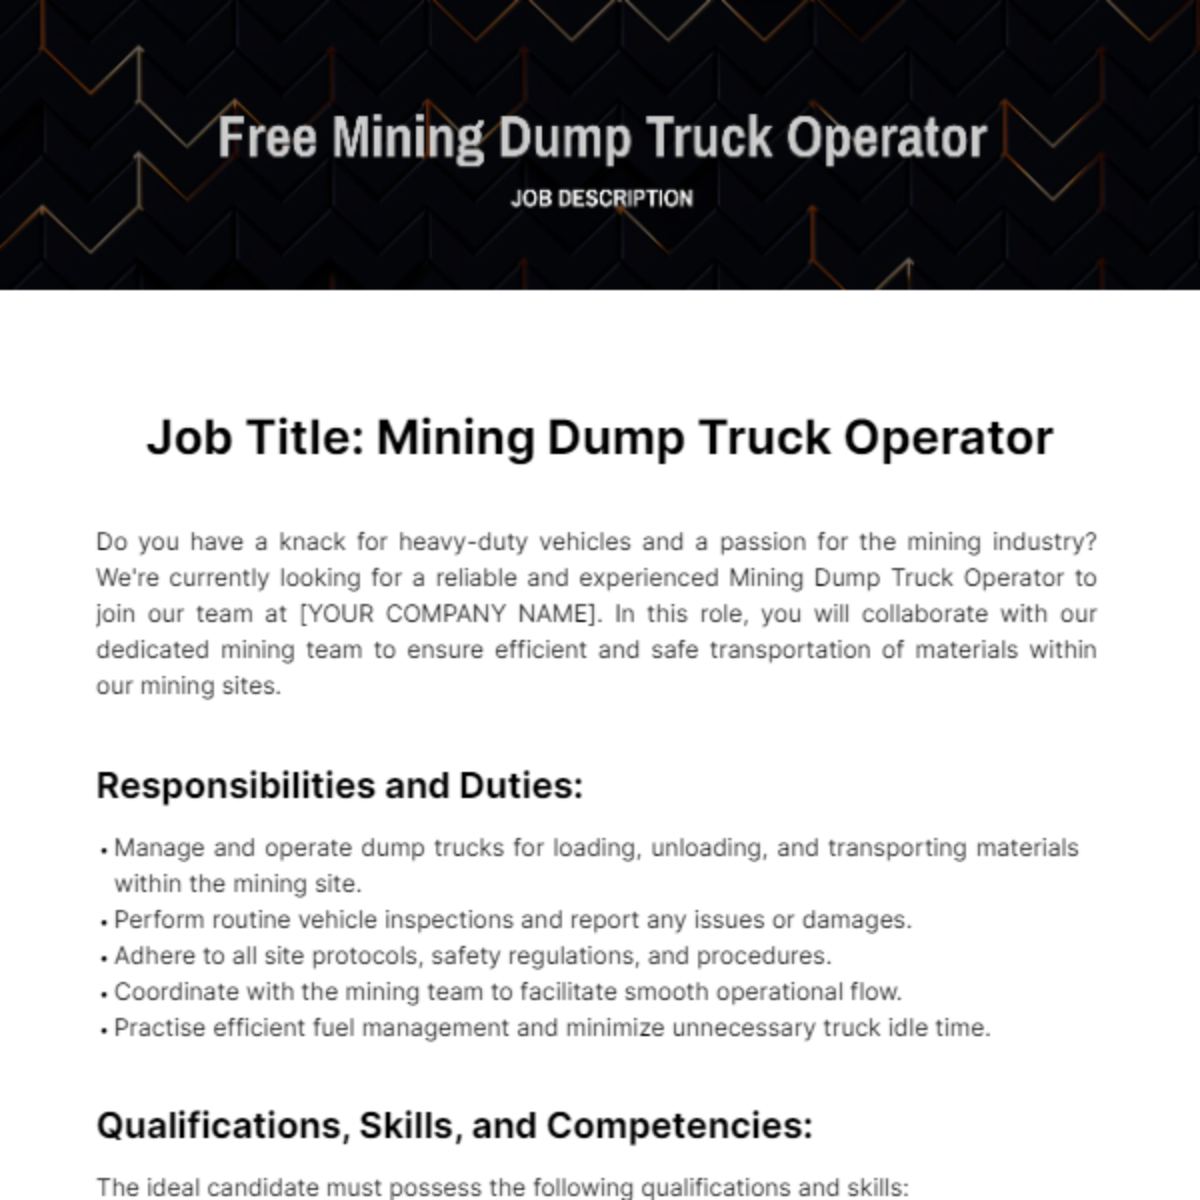 Free Mining Dump Truck Operator job Description Template